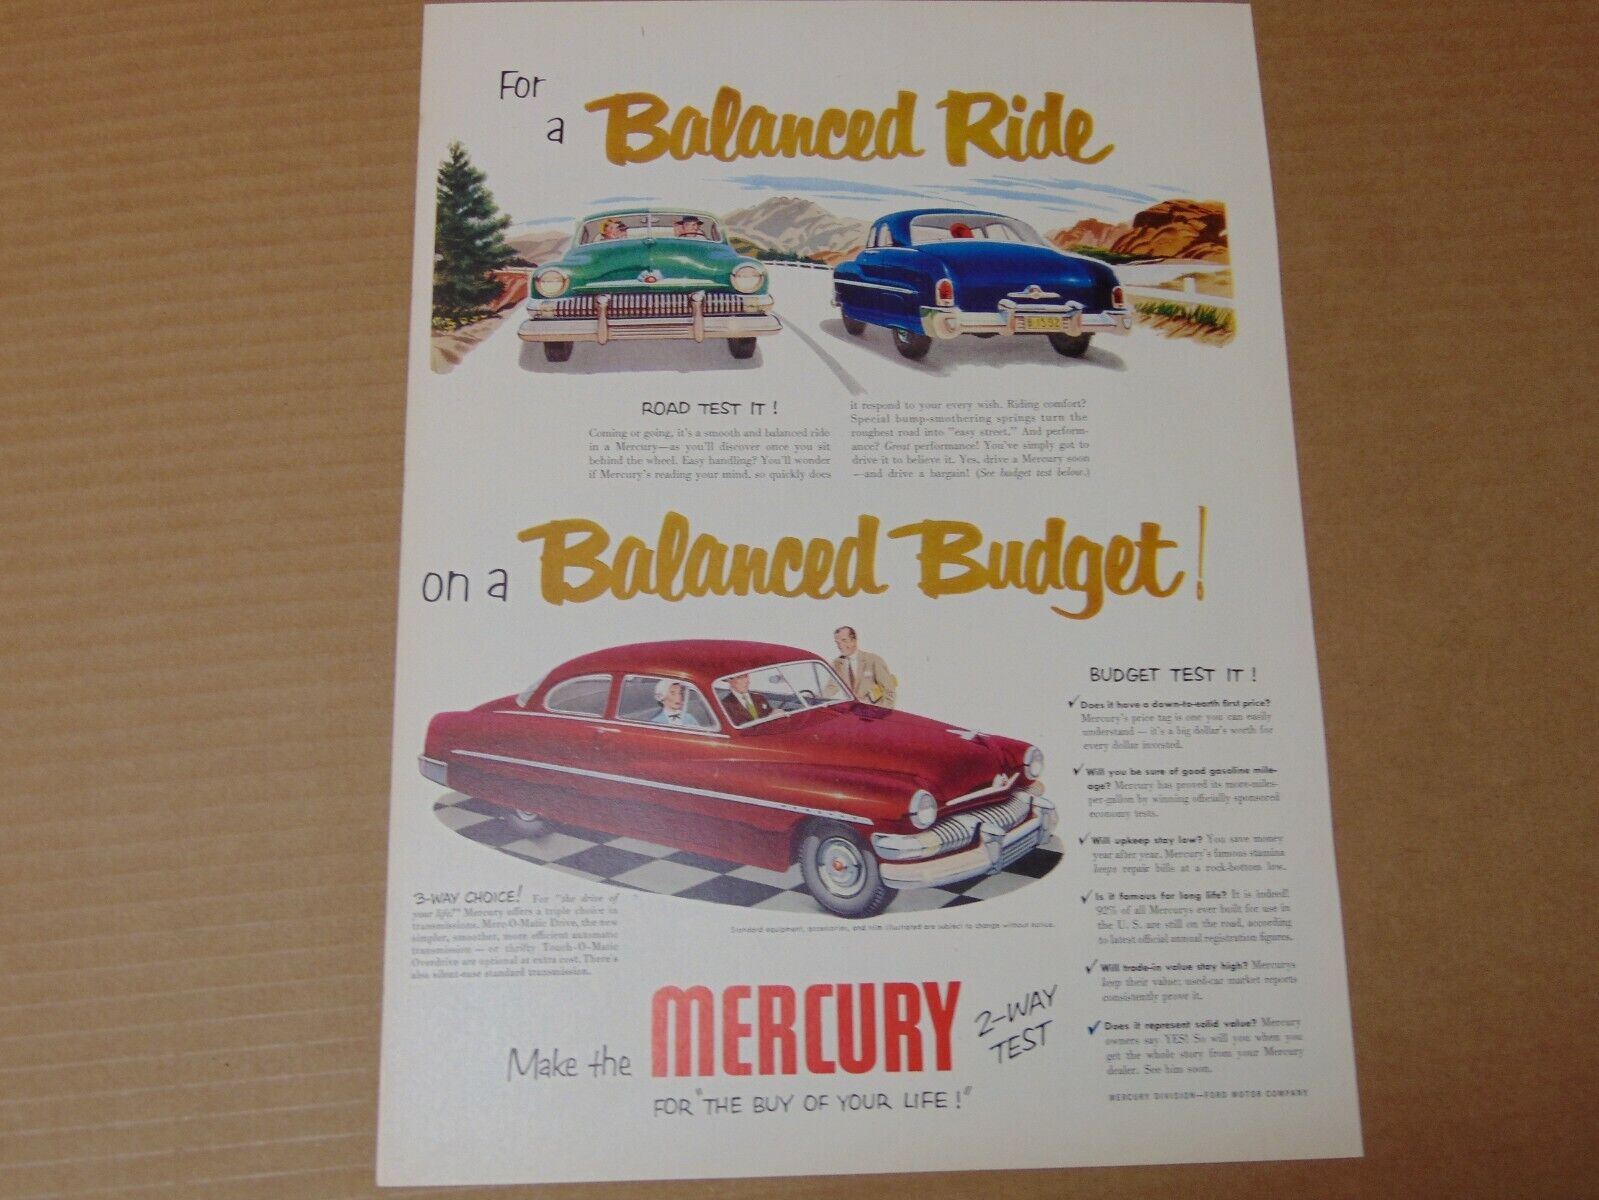 1951 MERCURY Balanced Ride Balanced Budget vintage art print ad 